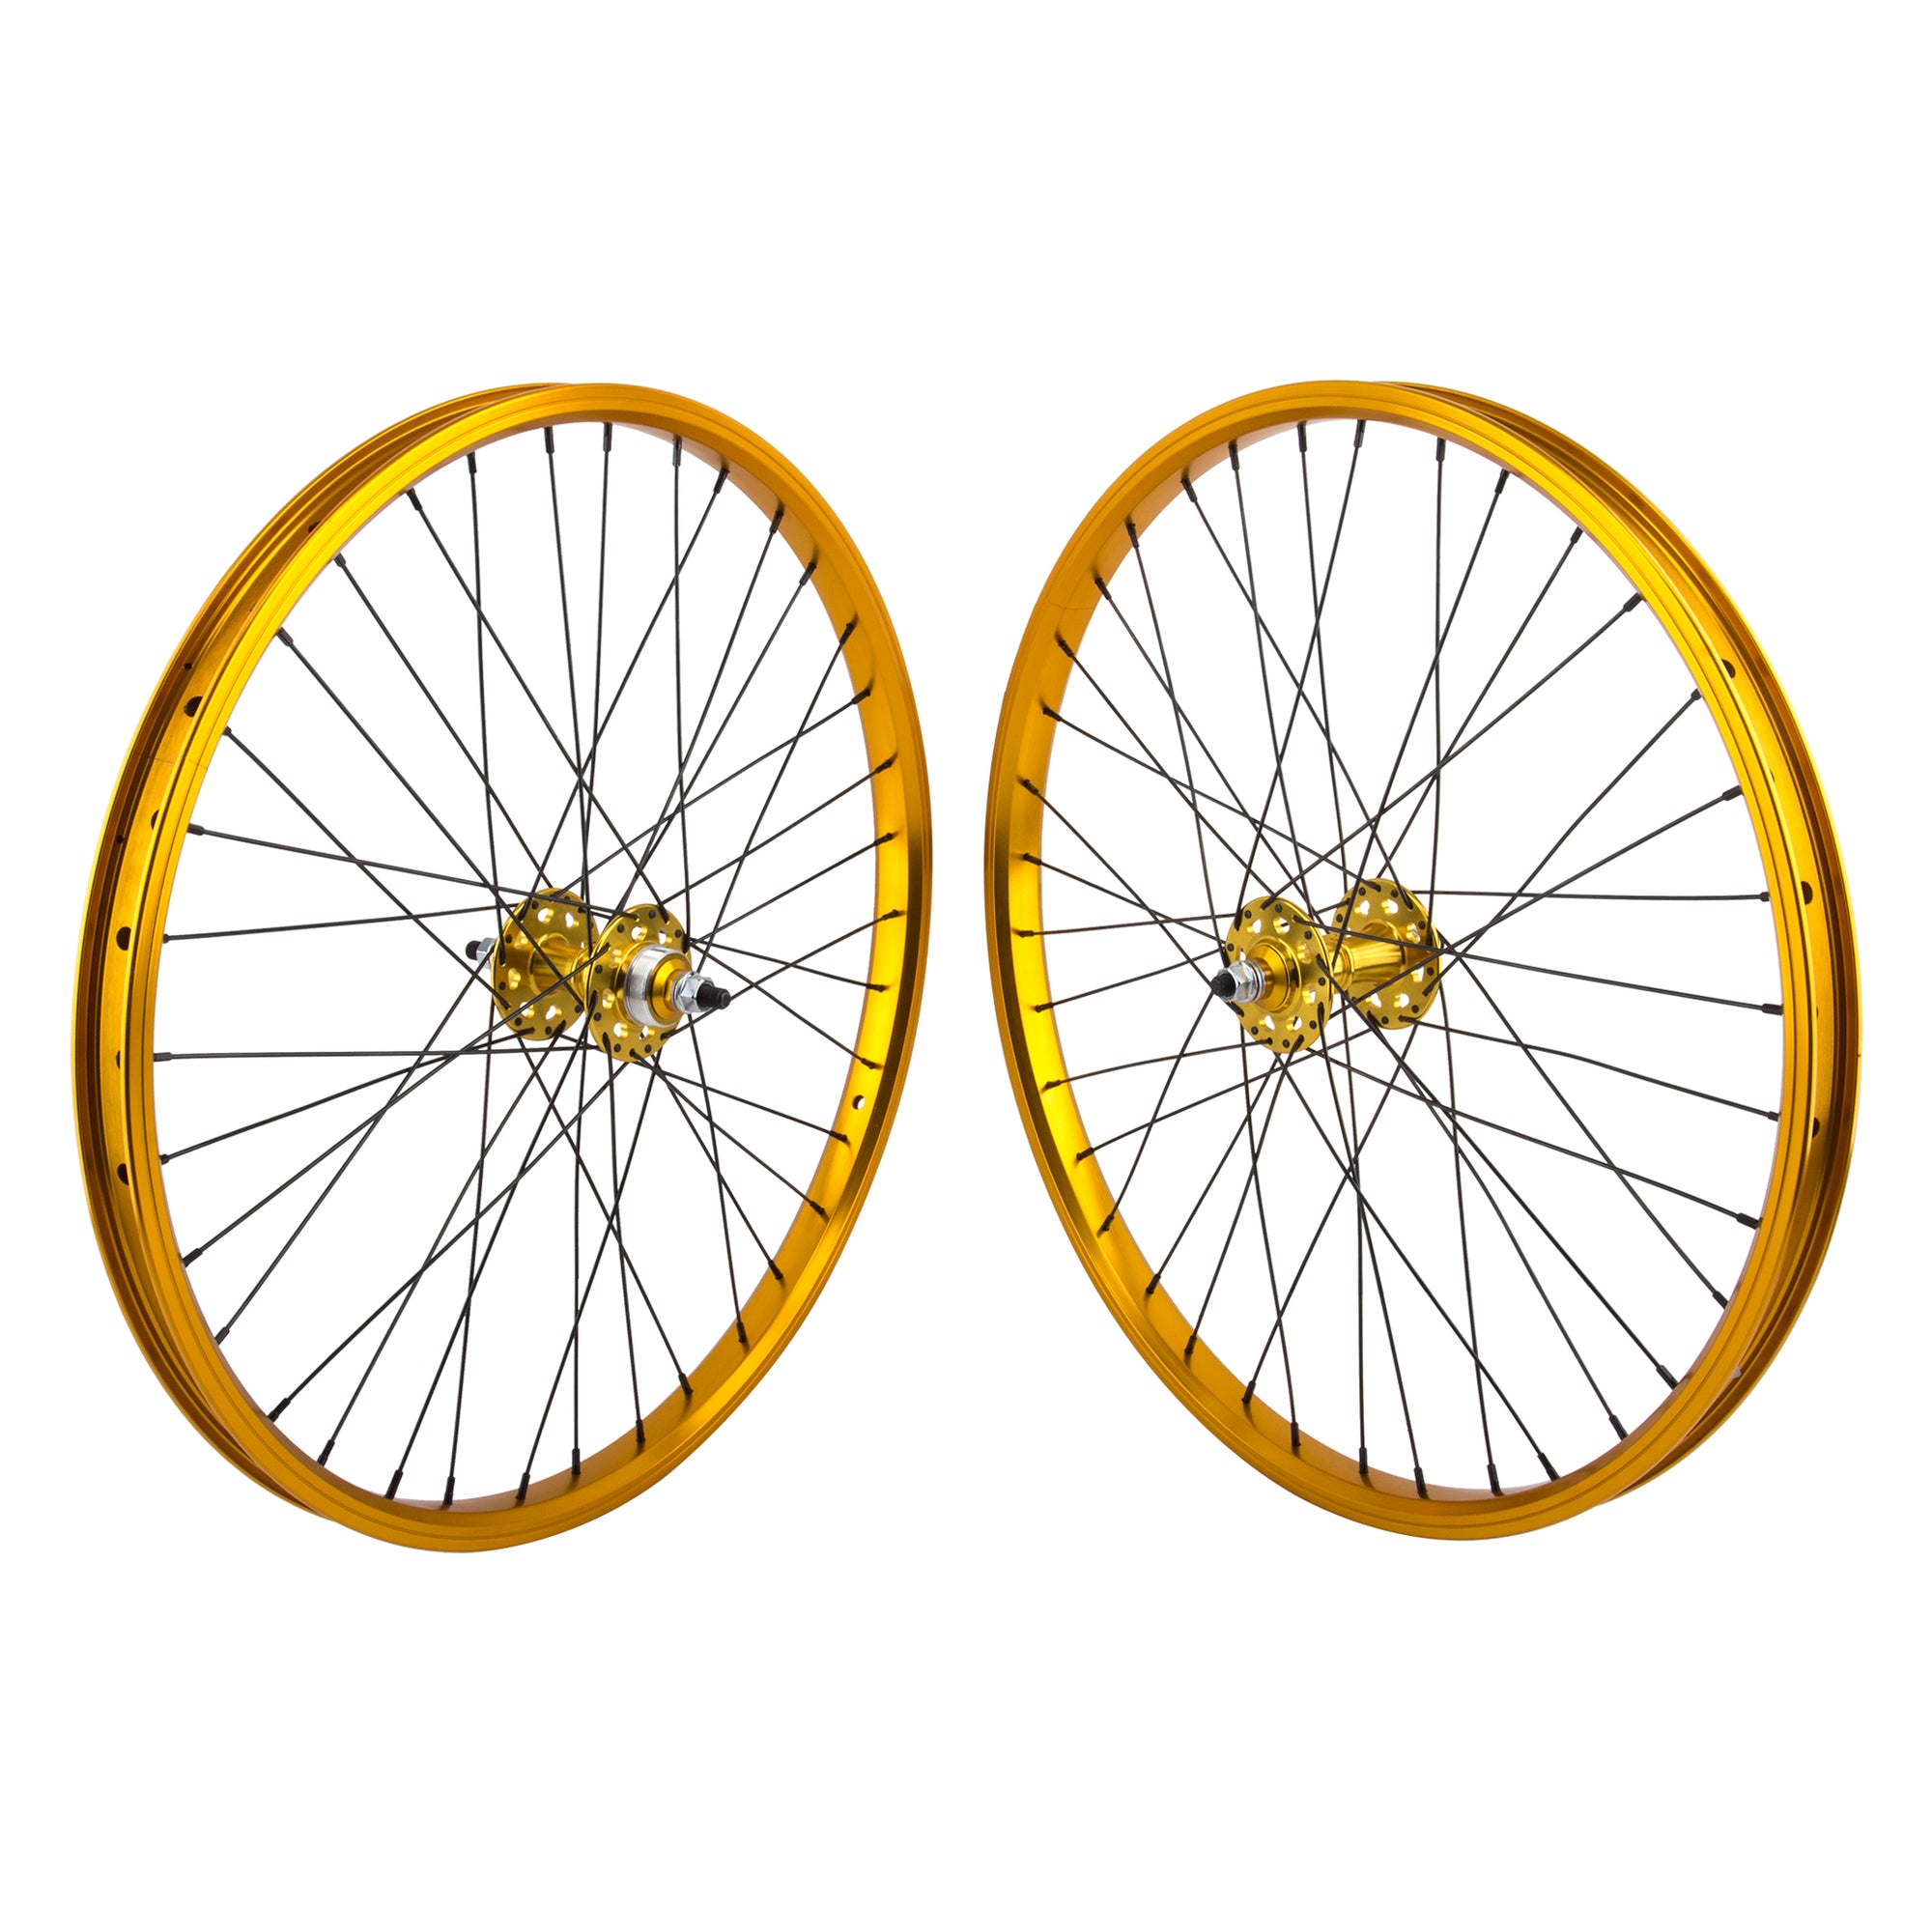 24" SE Racing Wheelset - Pair - 36H - Double Wall - Sealed Bearing - Freewheel - Gold